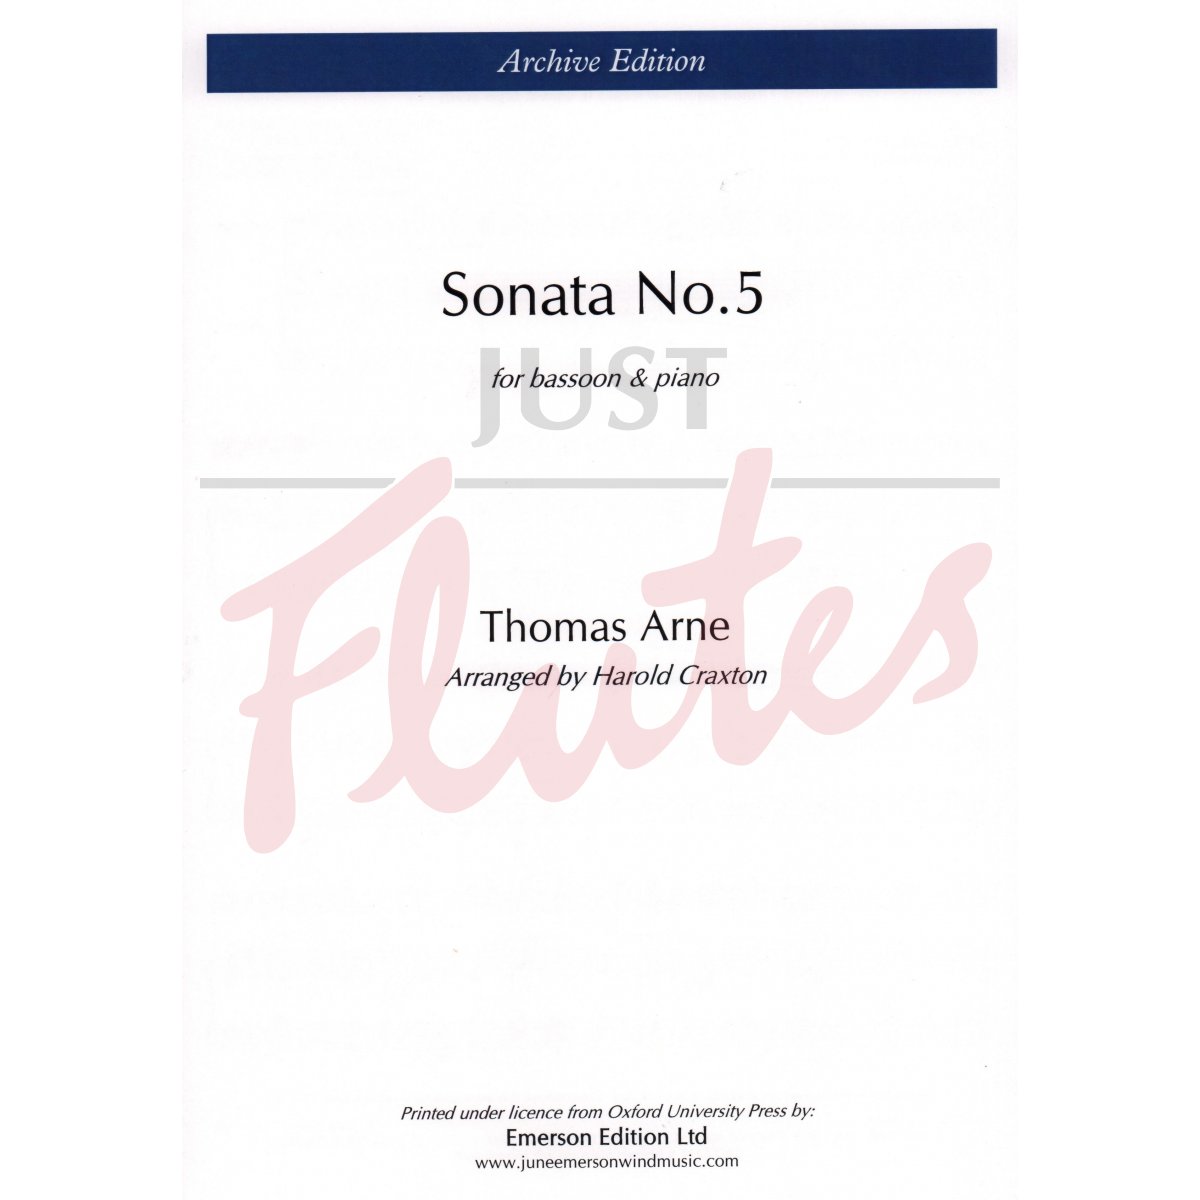 Sonata No. 5 for Bassoon and Piano